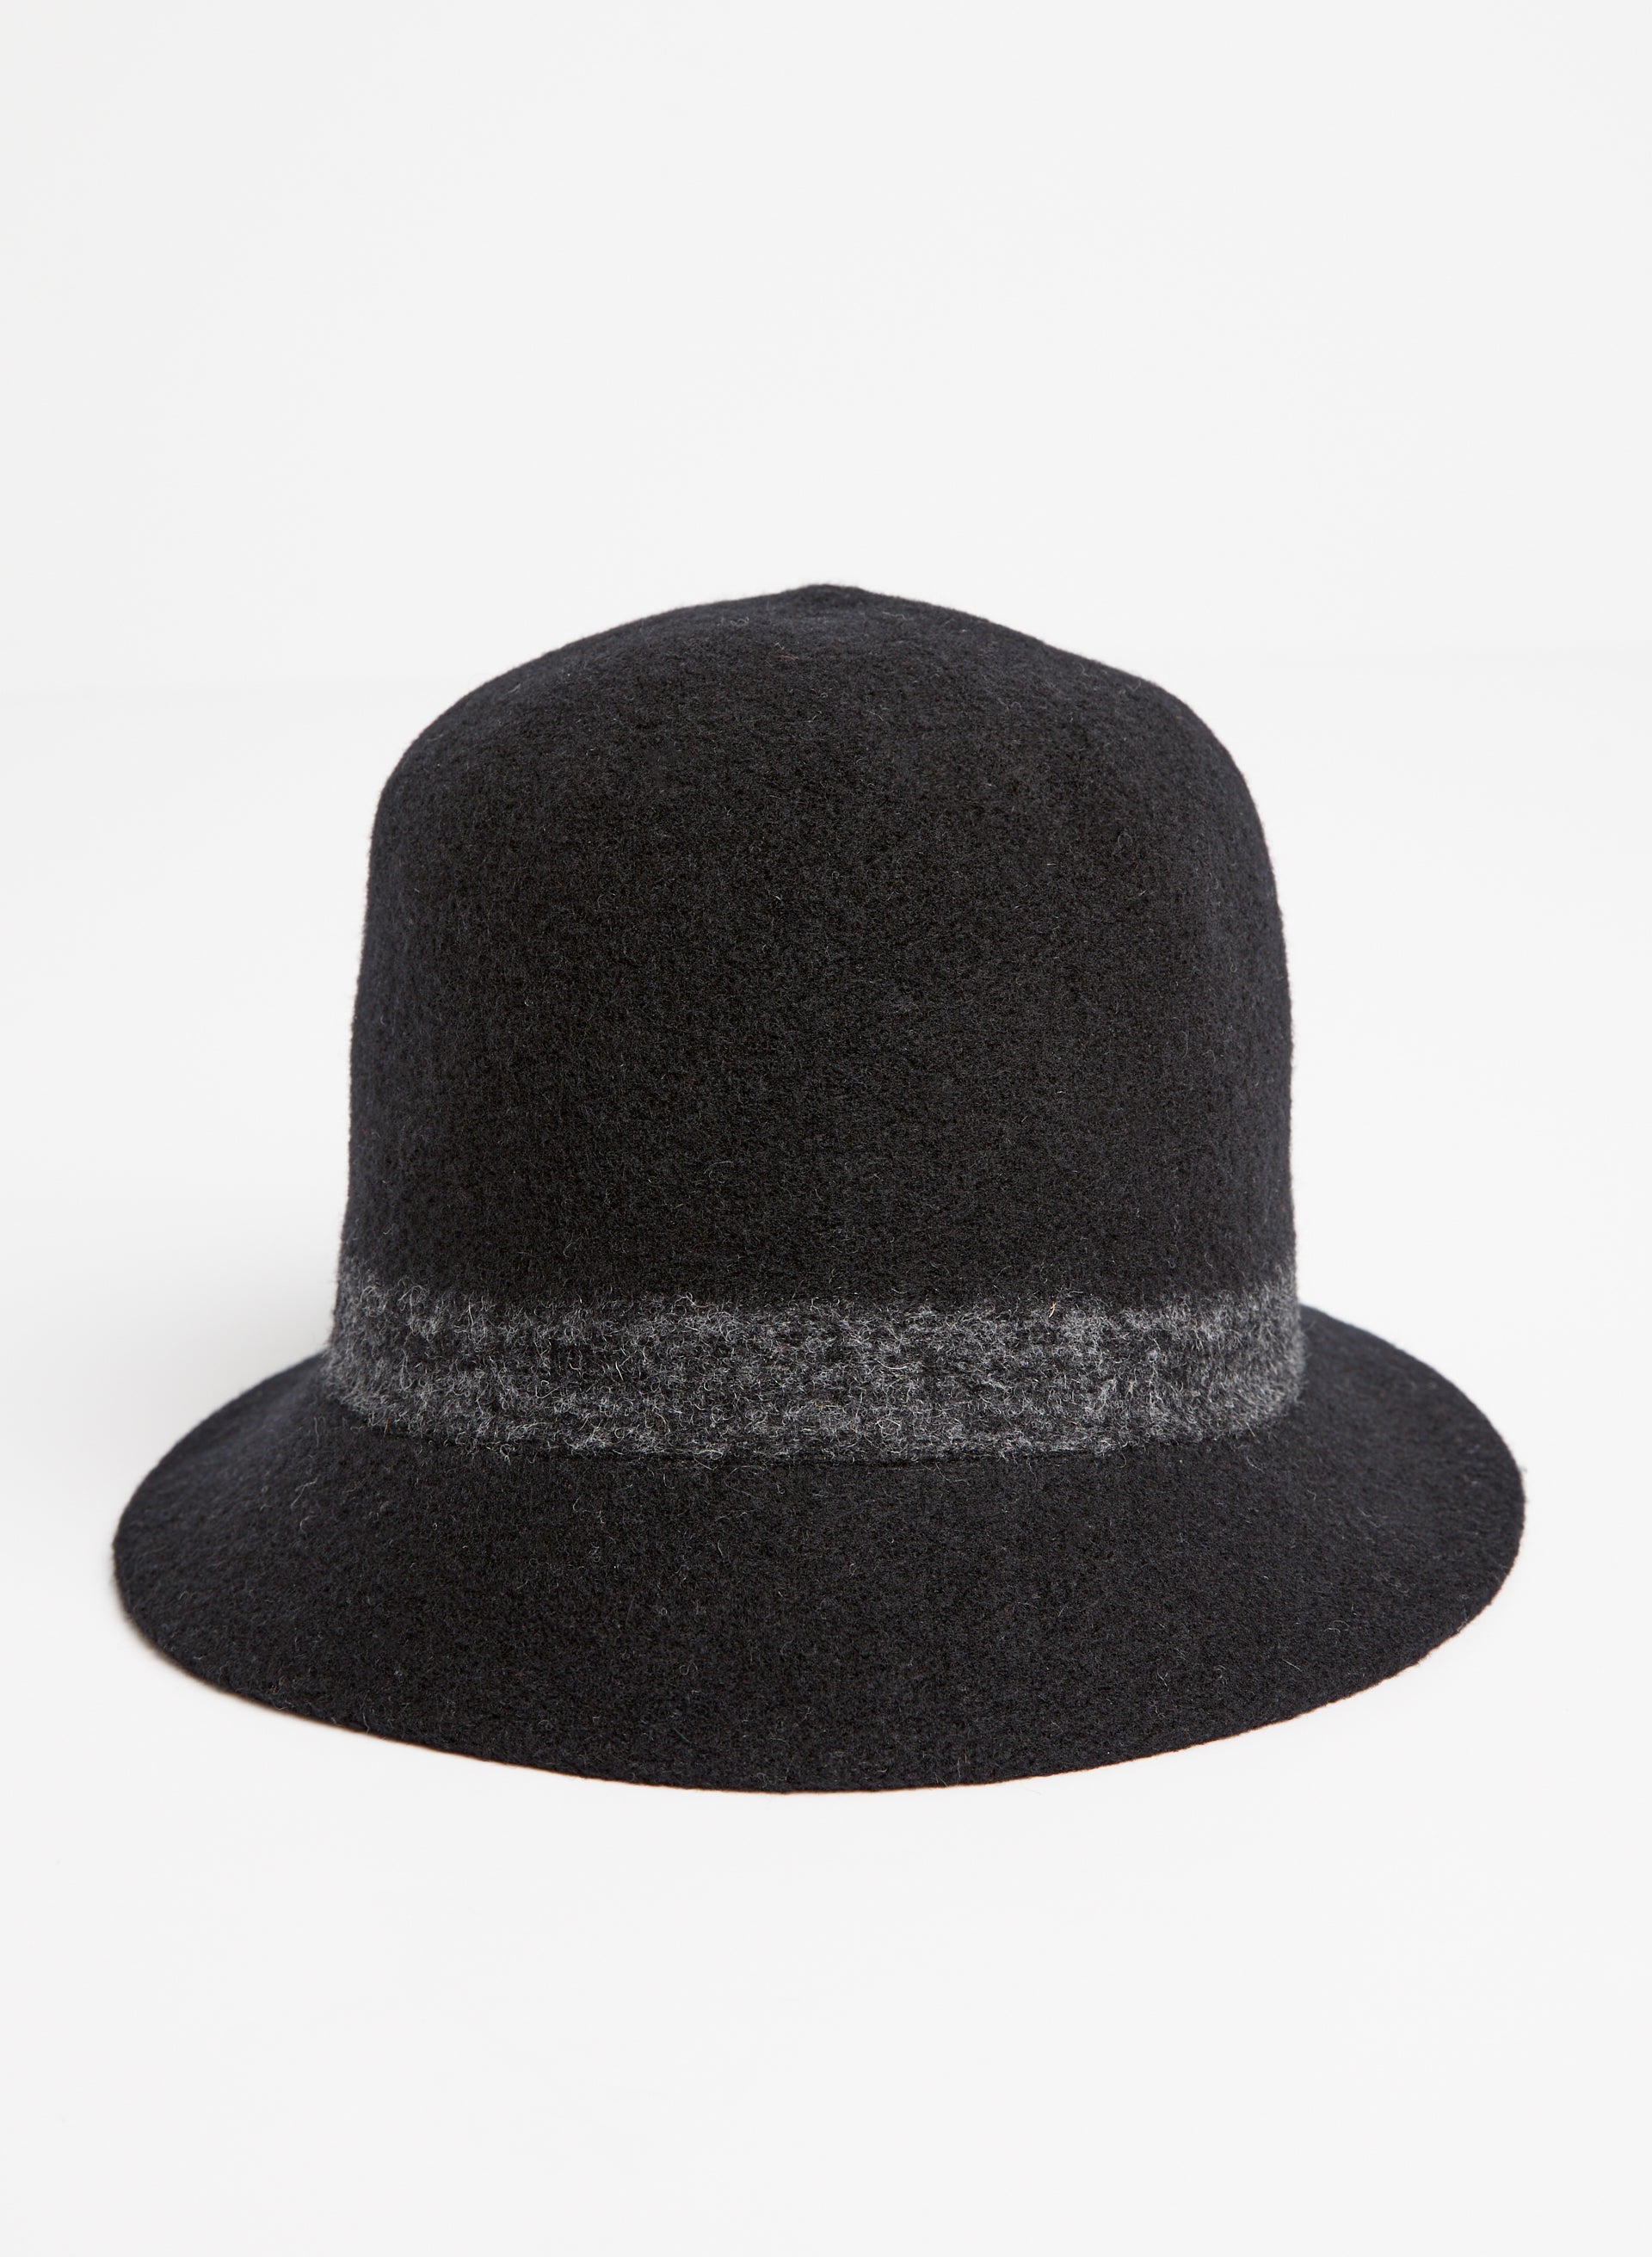 Wool Blend Cloche Hat